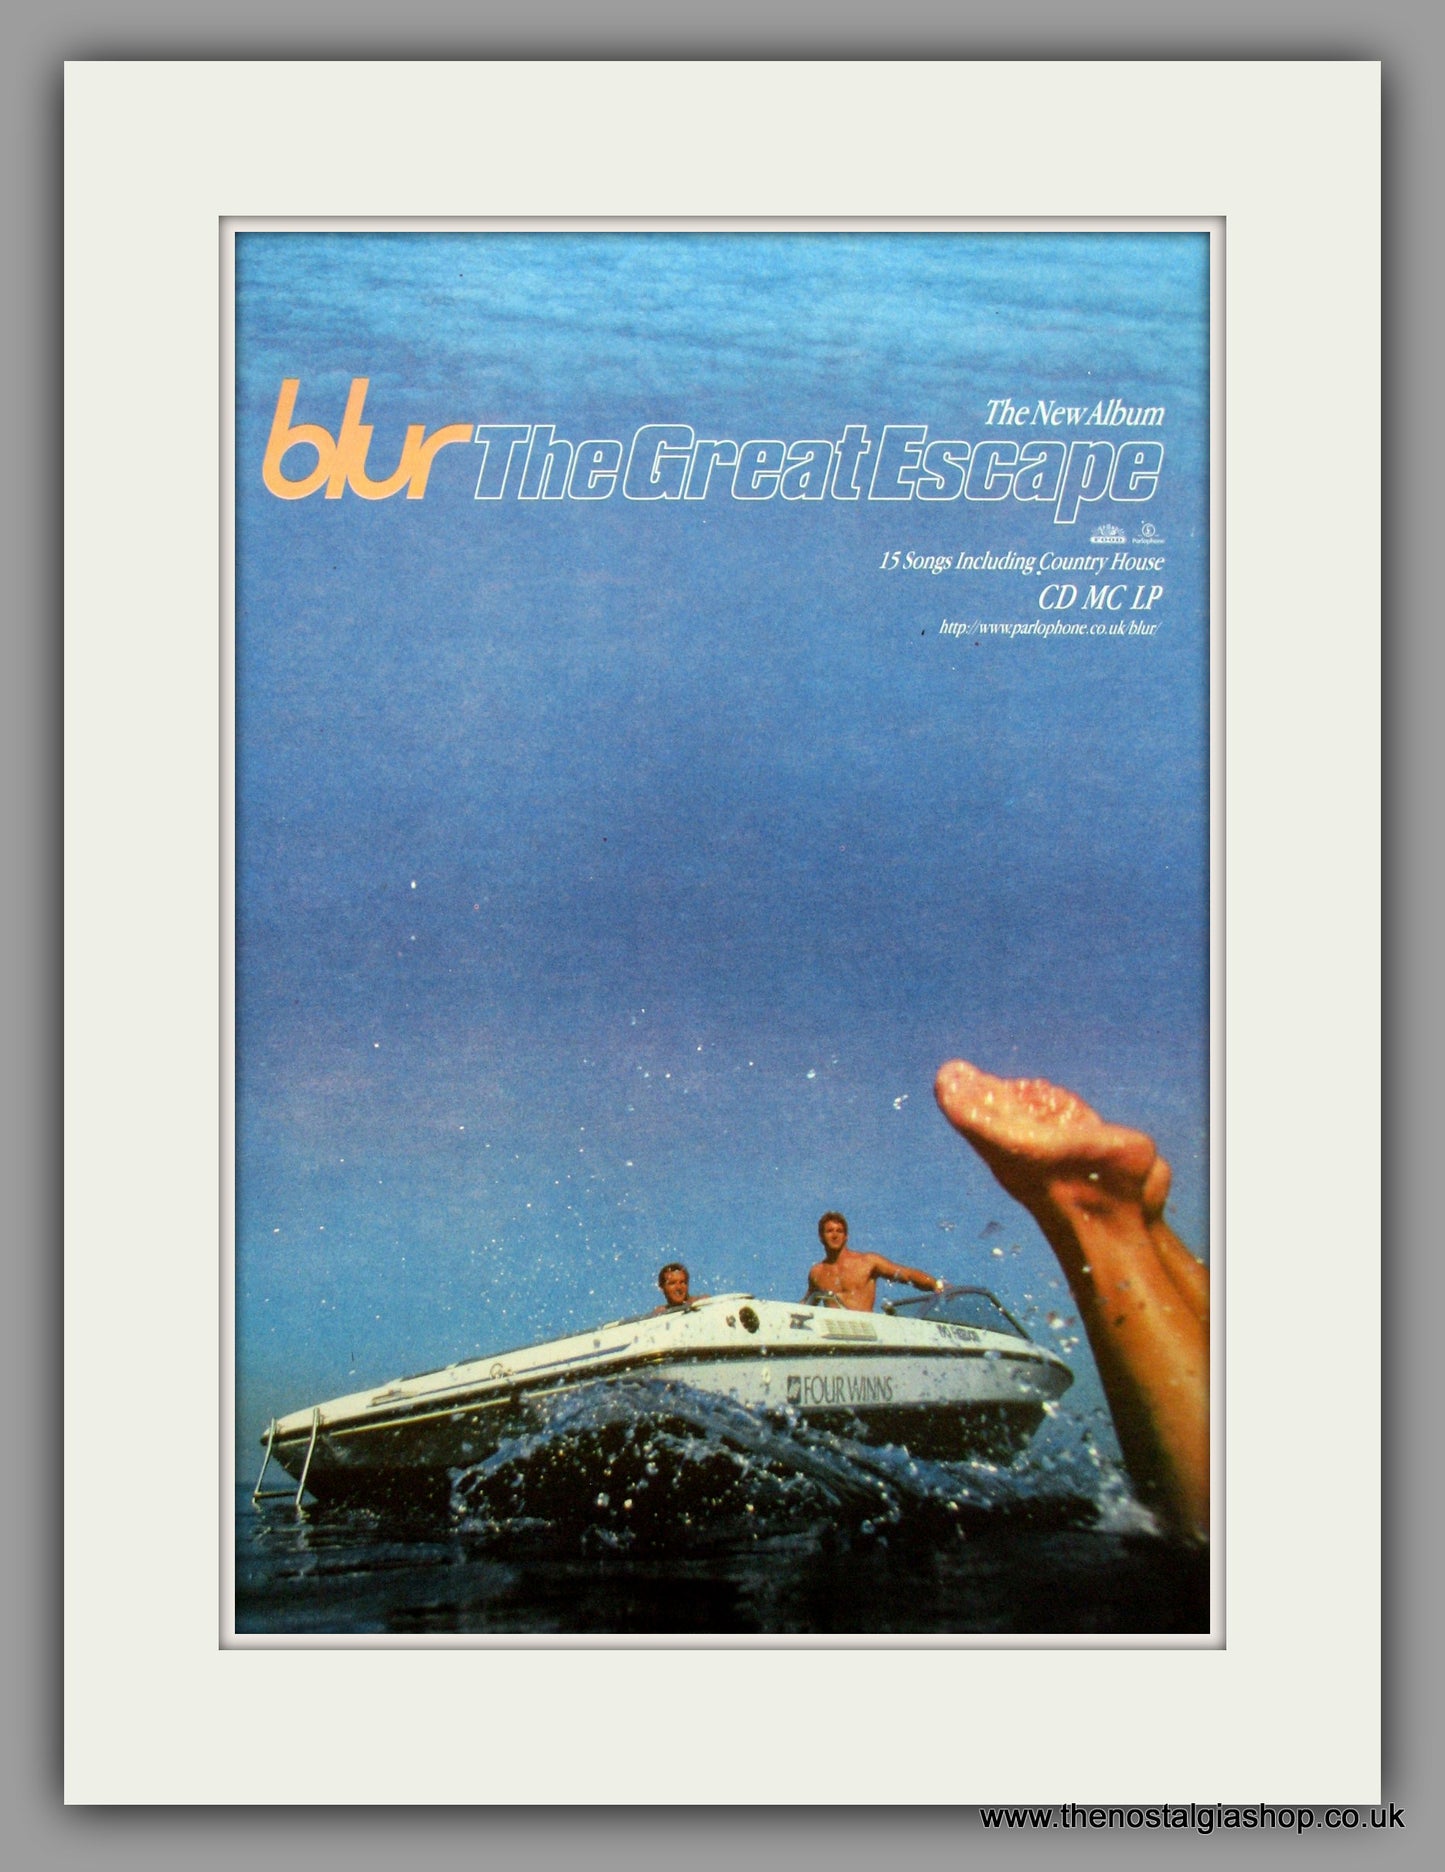 Blur-The Greatest Escape. Original Vintage Advert 1995 (ref AD10645)